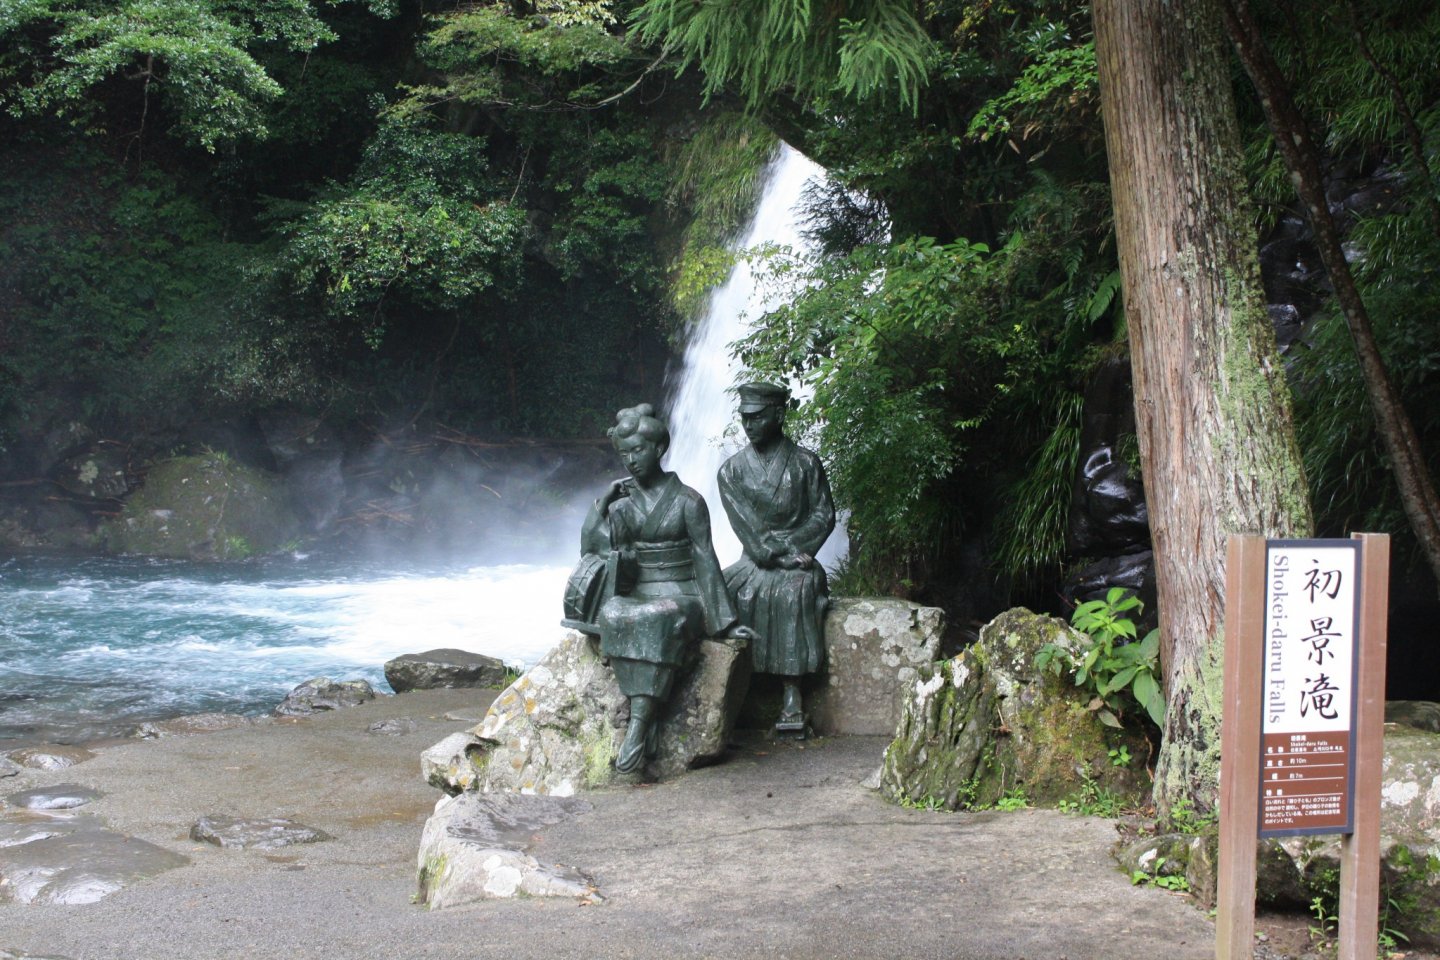 La statue de la danseuse et de son ami devant la cascade Shokei-daru